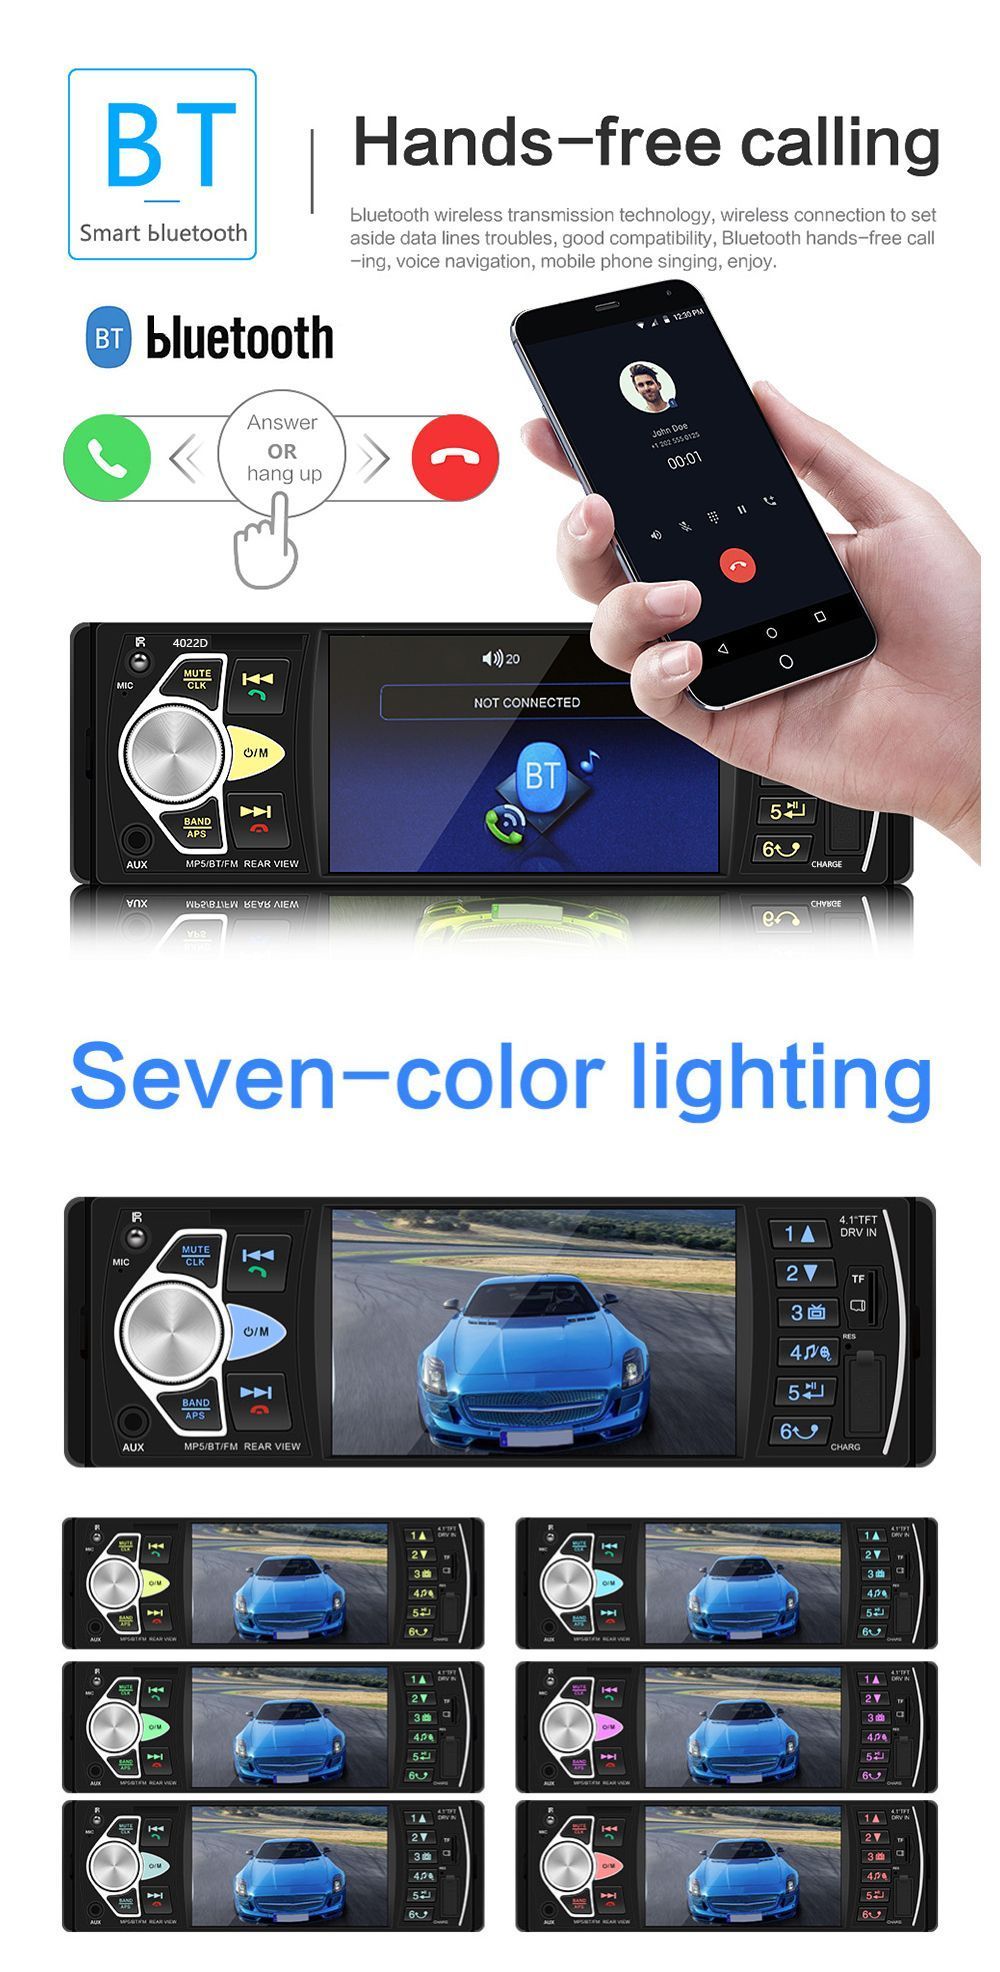 41-Inch-1-Din-Car-Radio-Auto-Audio-MP5-Player-bluetooth-Handsfree-USB-AUX-Steering-Wheel-Control-wit-1558400